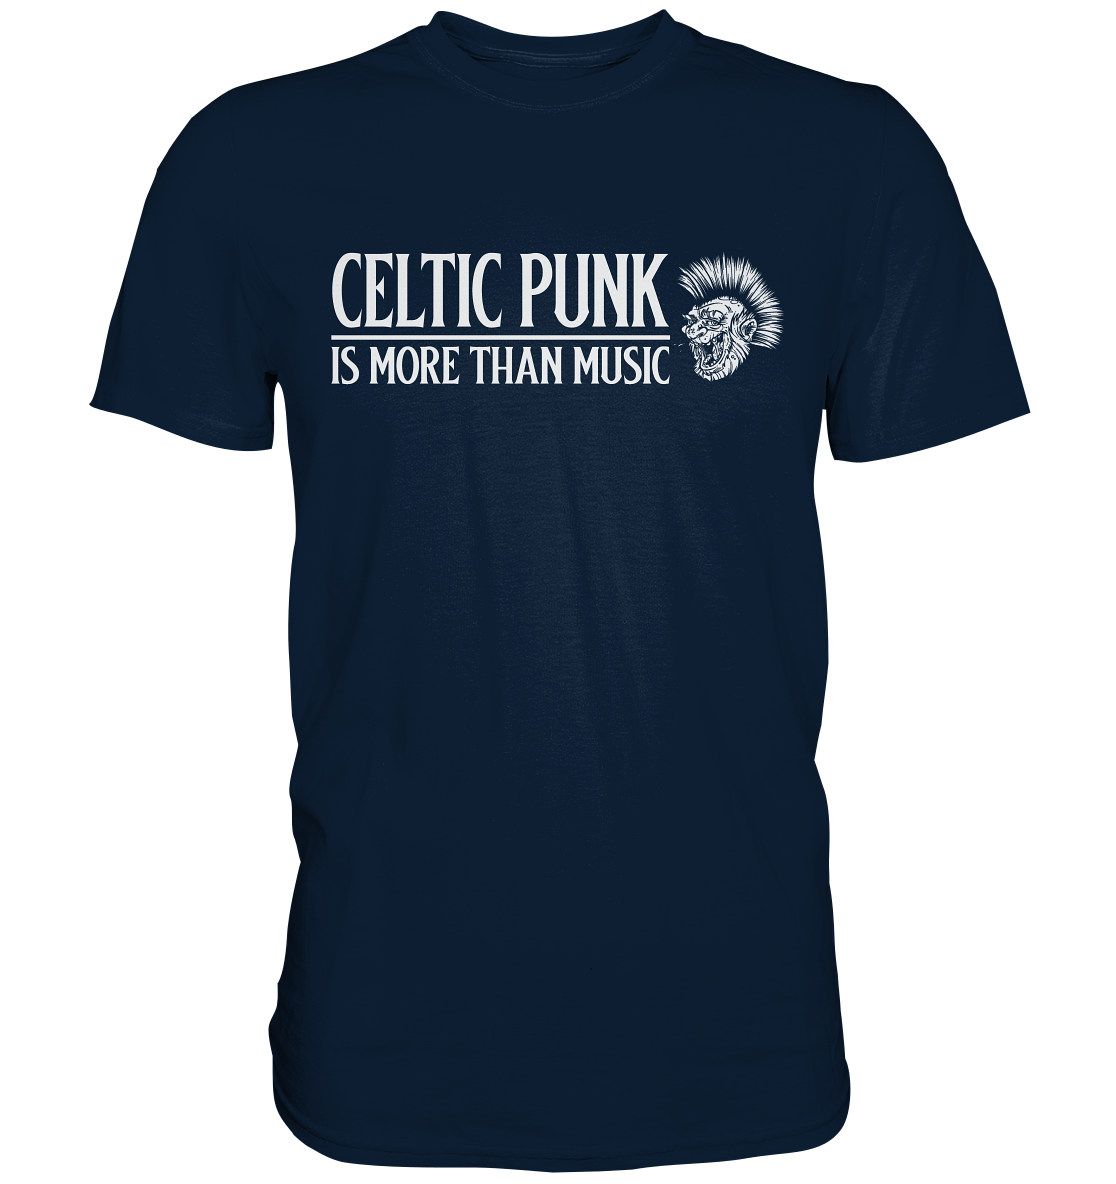 Celtic Punk "Is More Than Music" - Premium Shirt